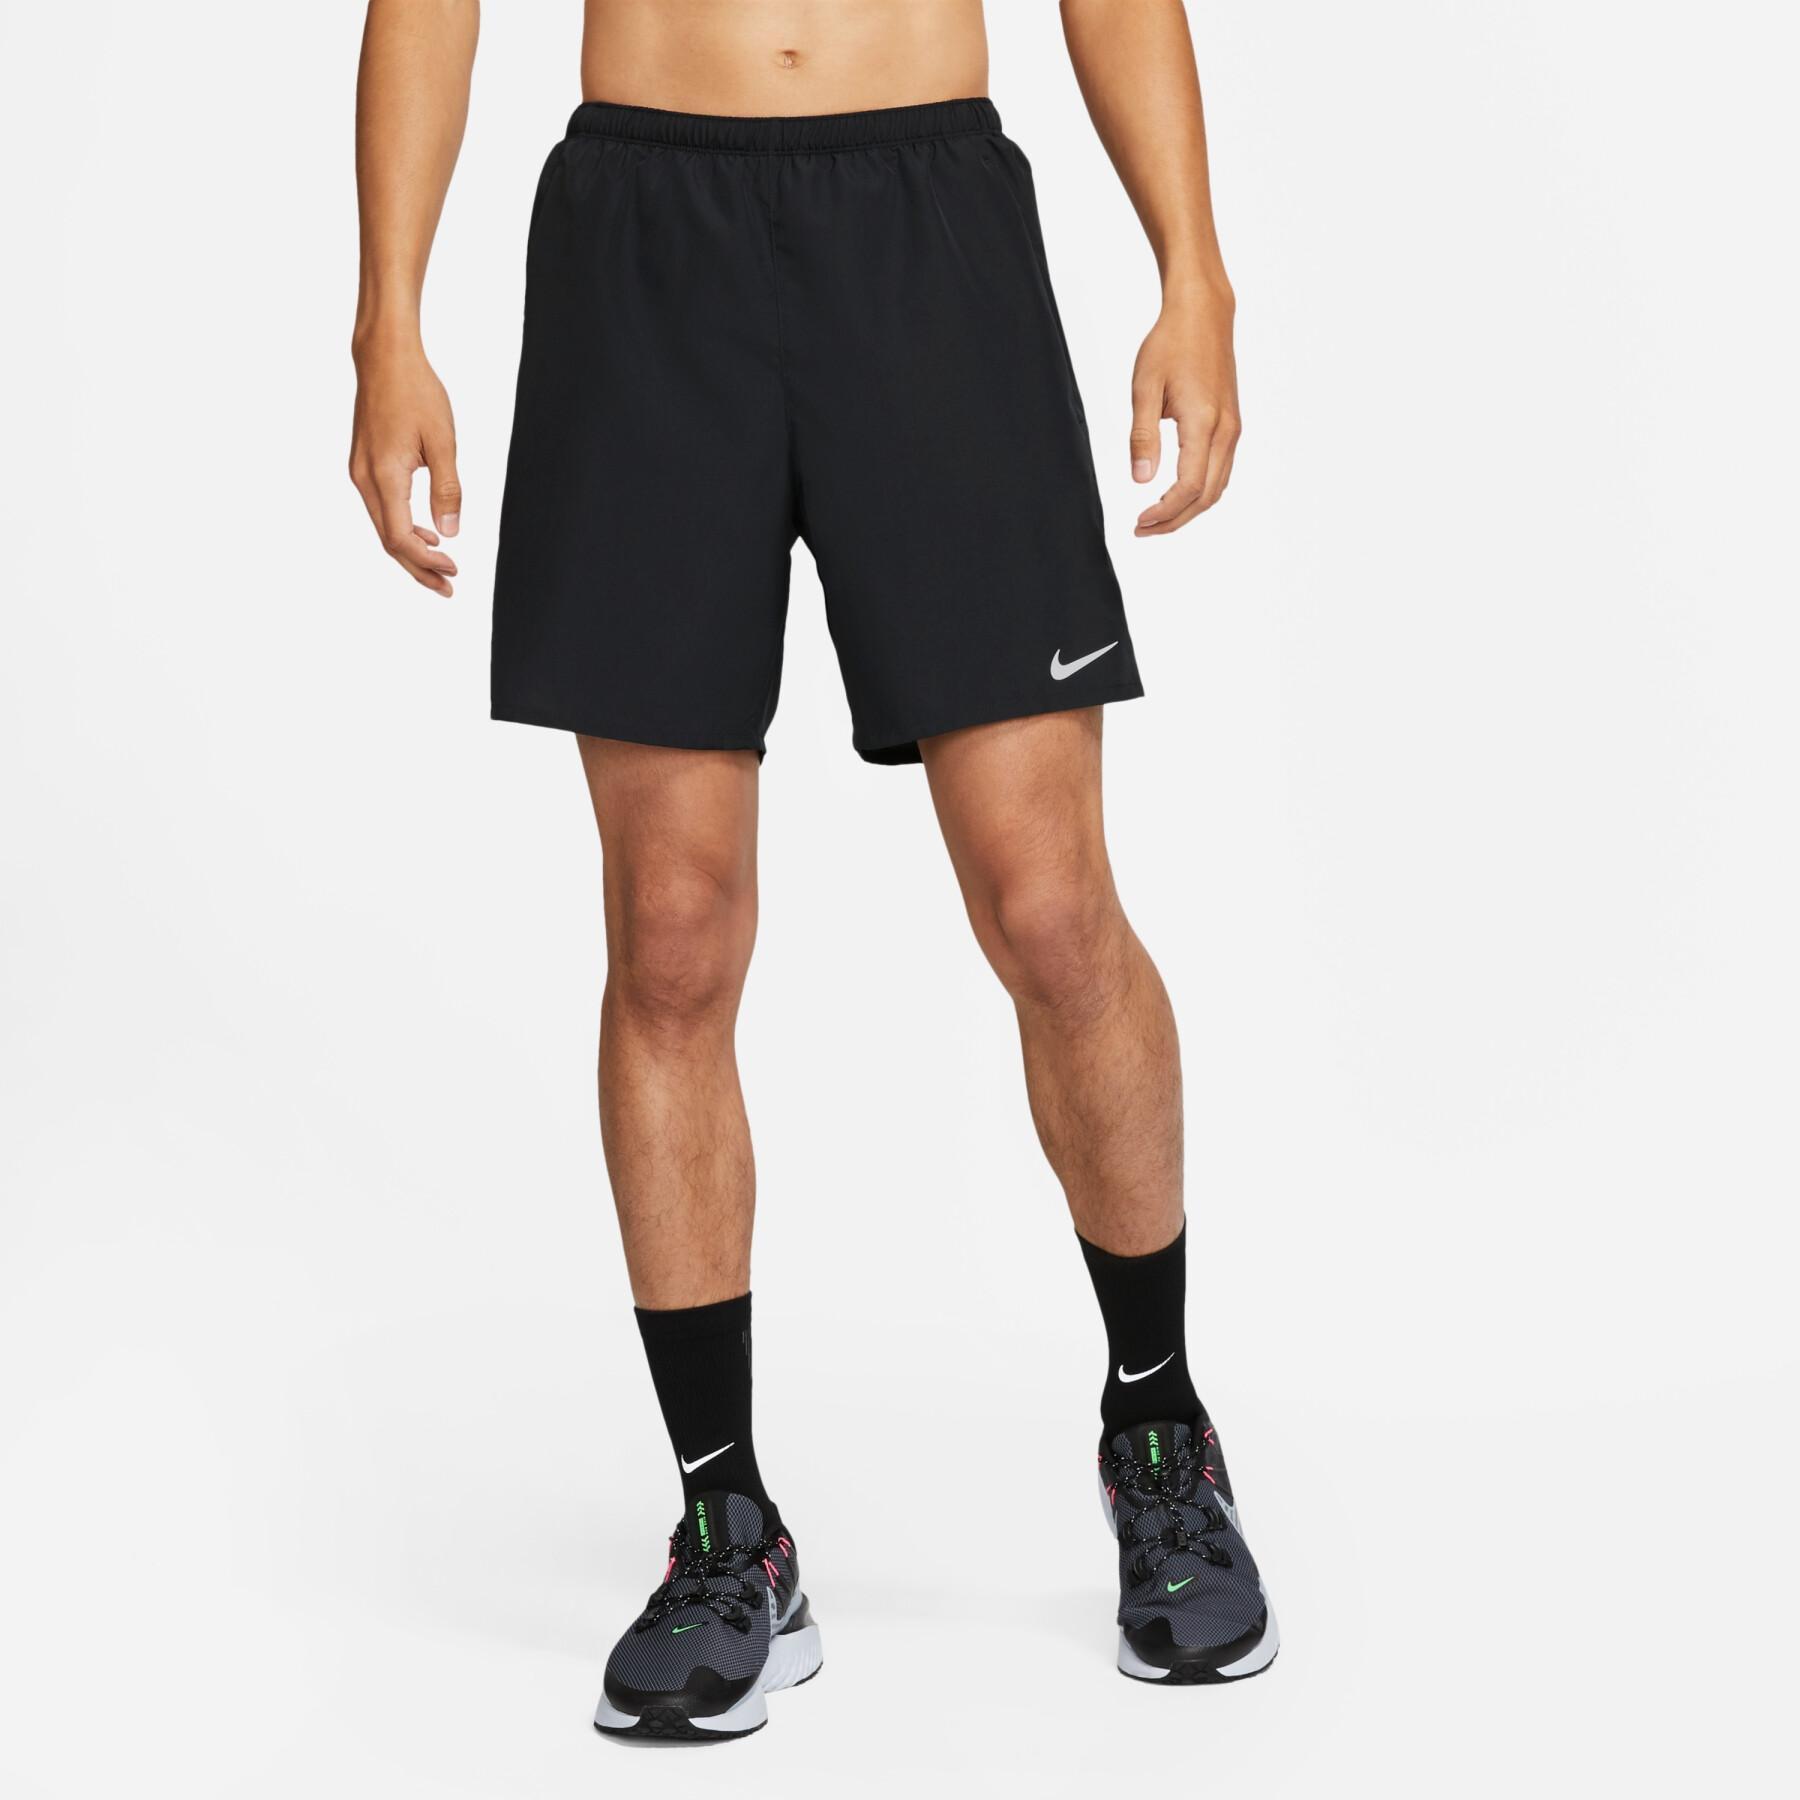 Short Nike challenger - Nike - Brands - Handball wear